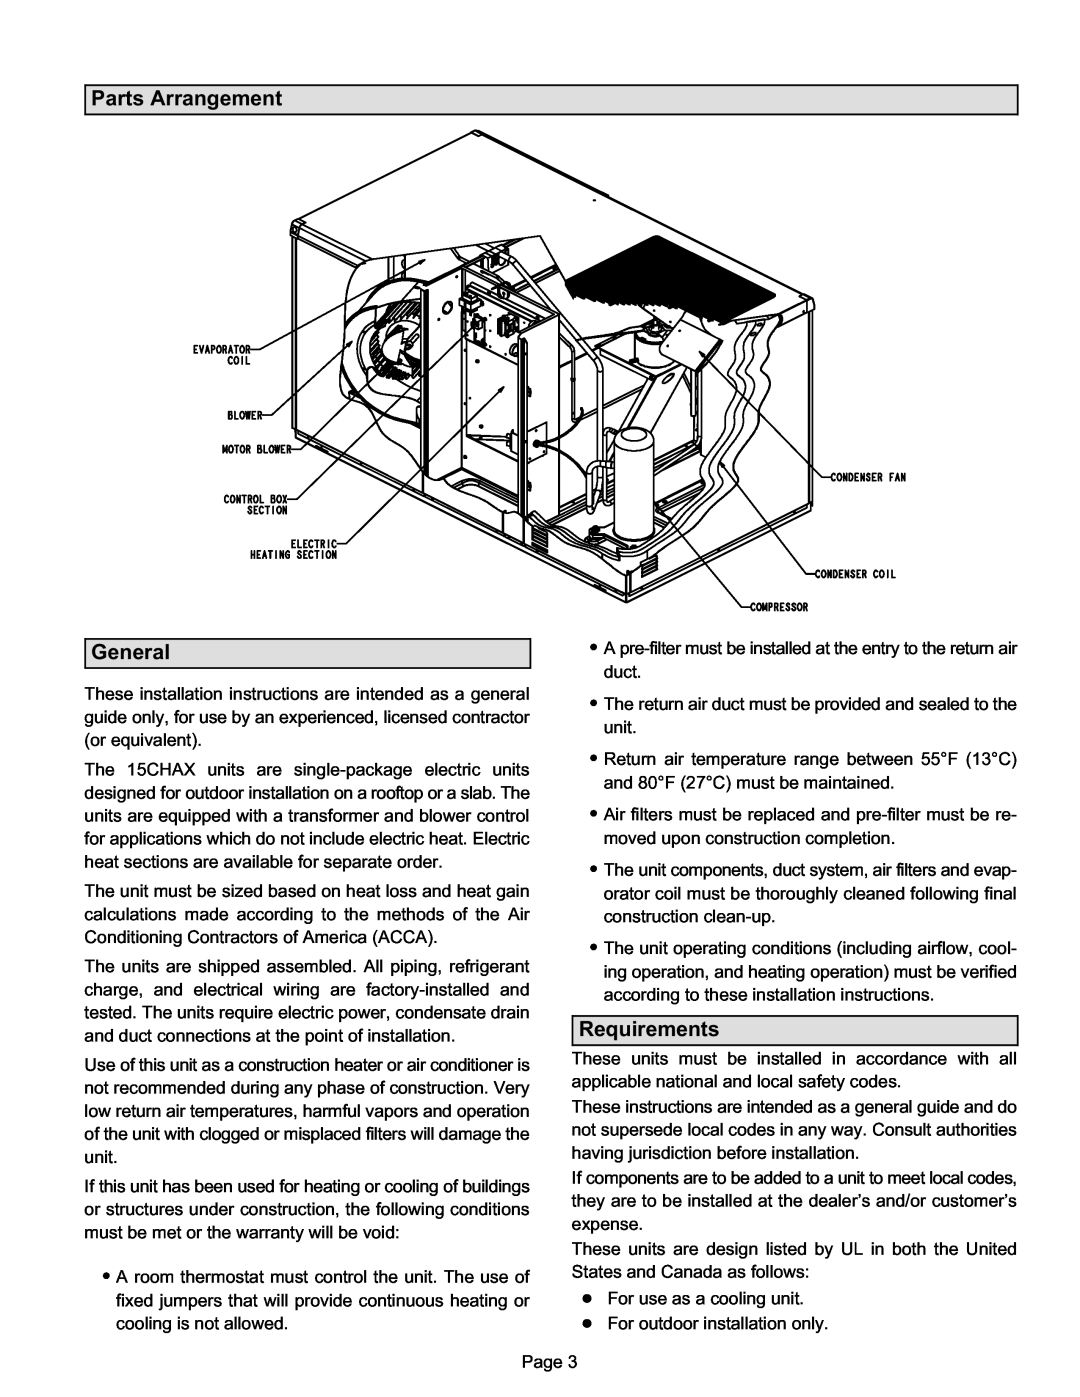 Lennox International Inc 15CHAX Series installation instructions Parts Arrangement, General, Requirements 